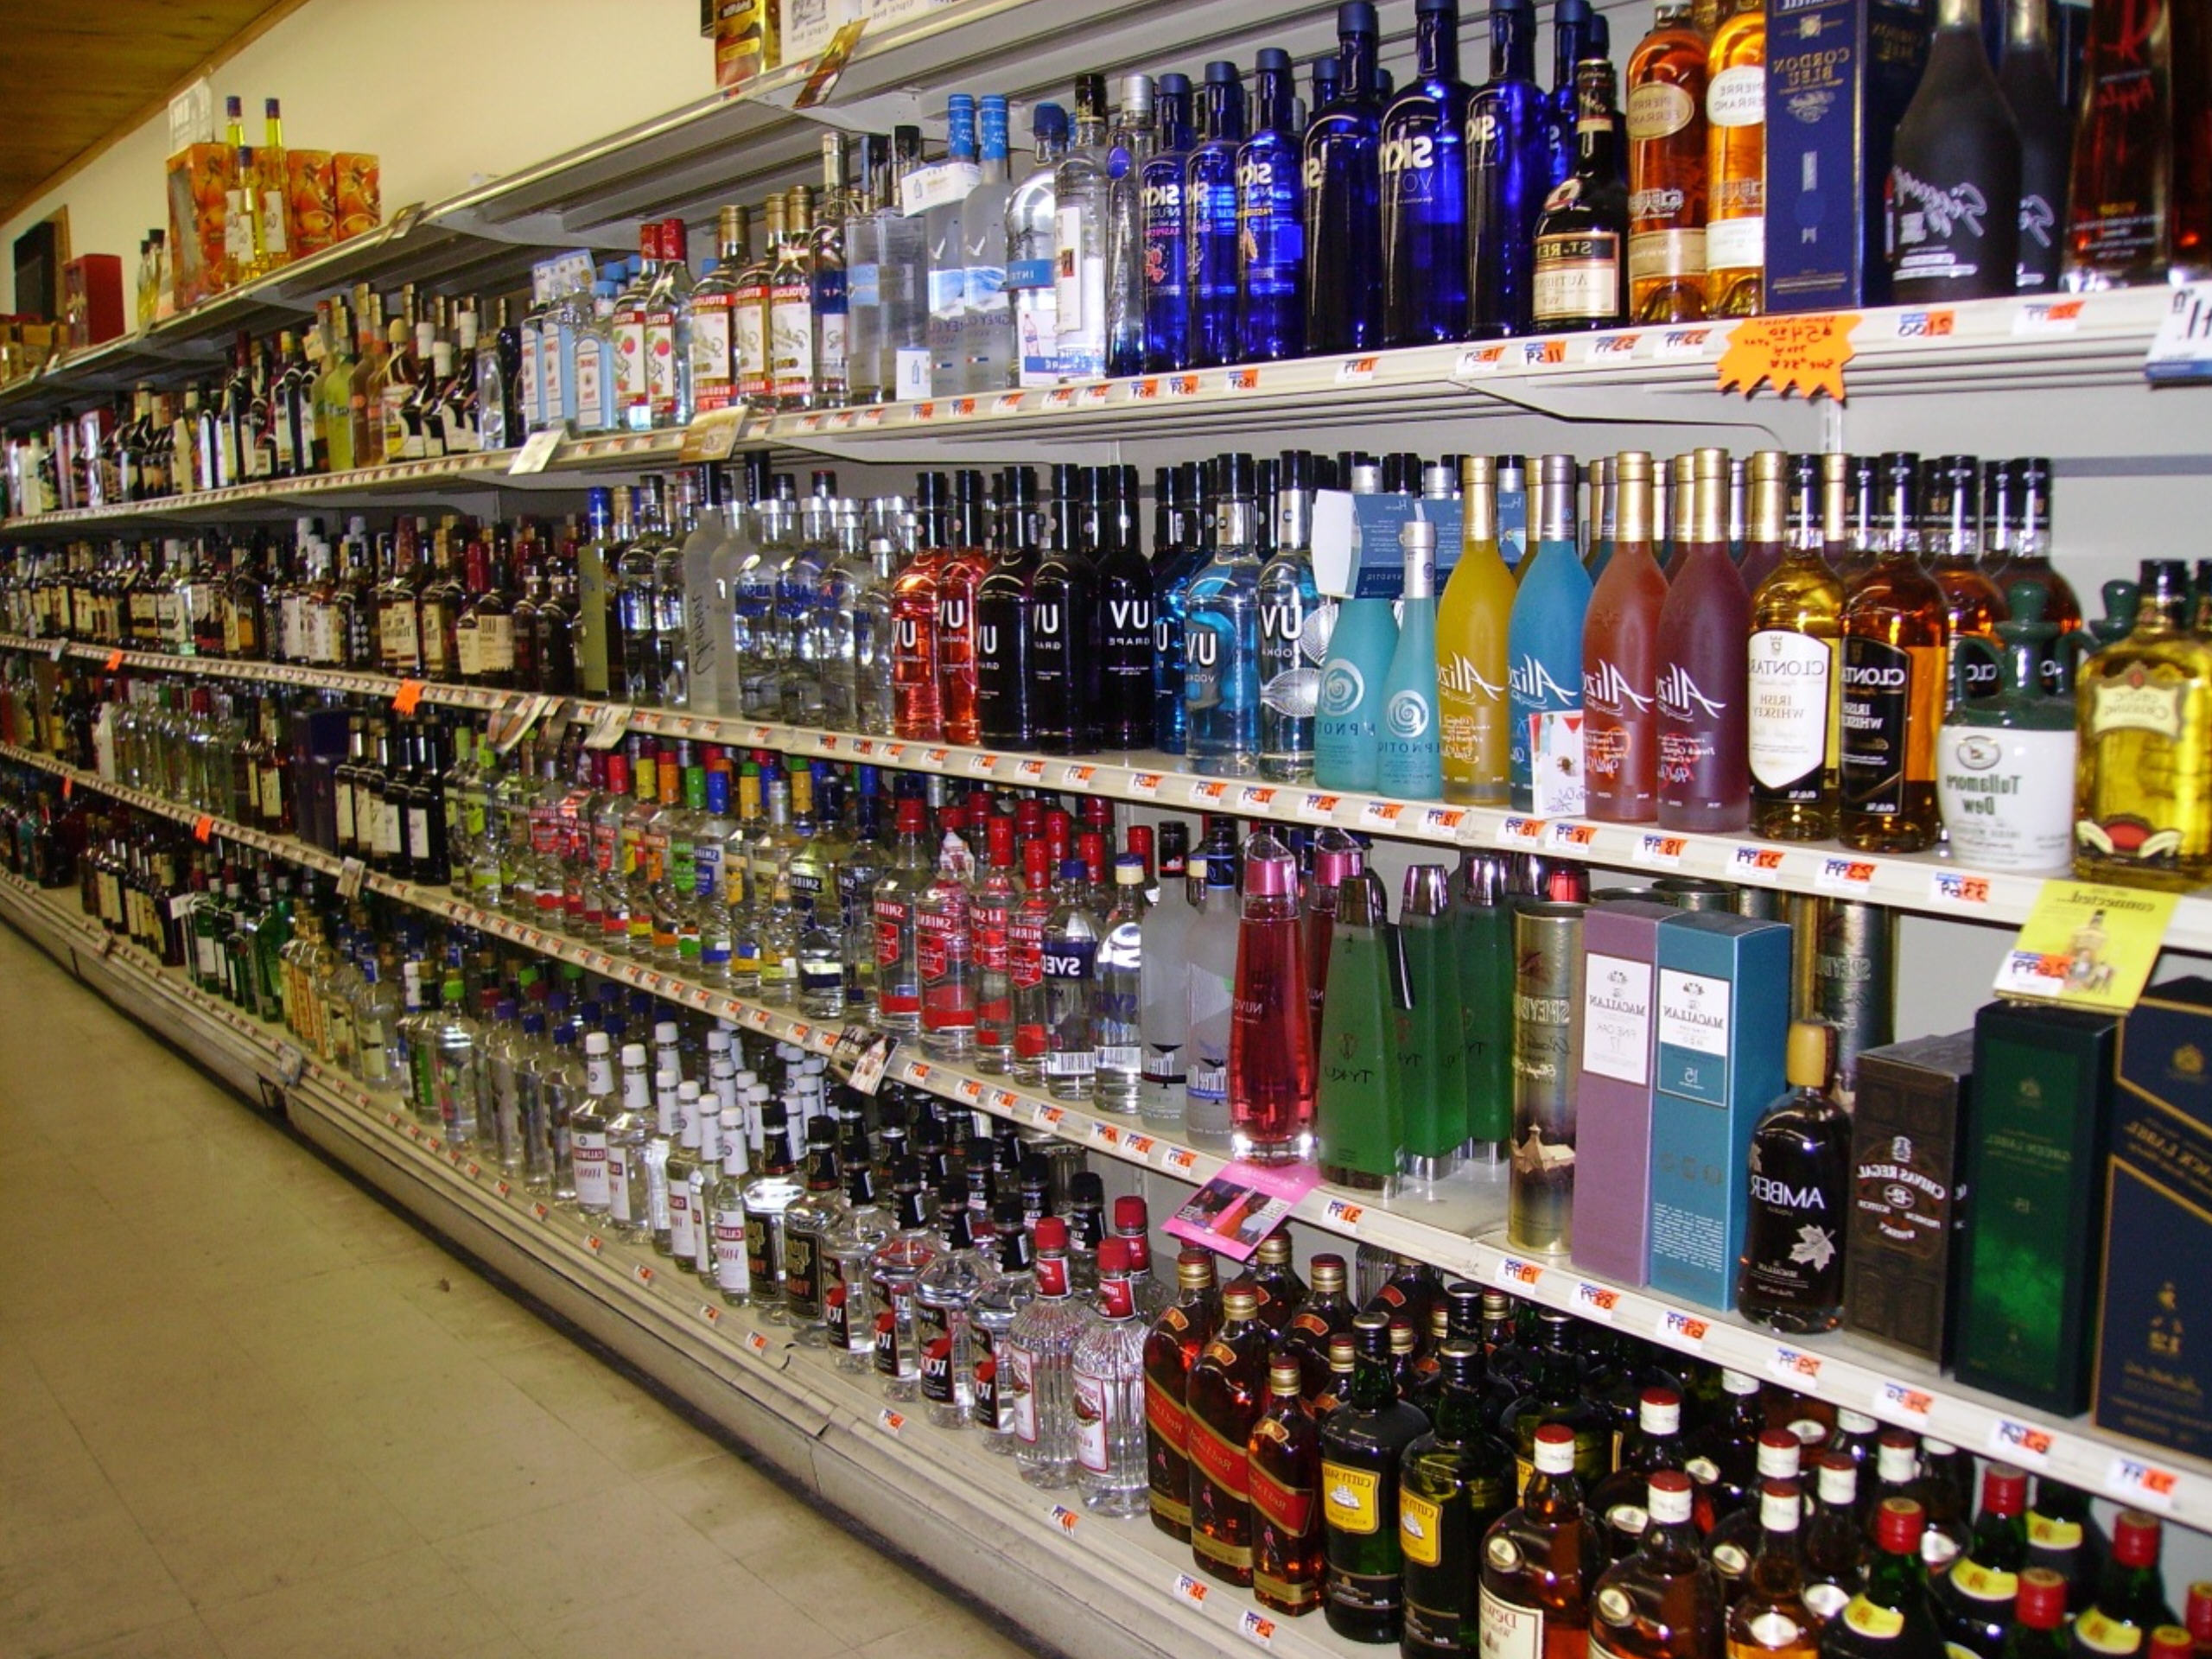 3_leahy_s_liquors_liquor_shelf_compressed_jpeg.jpg